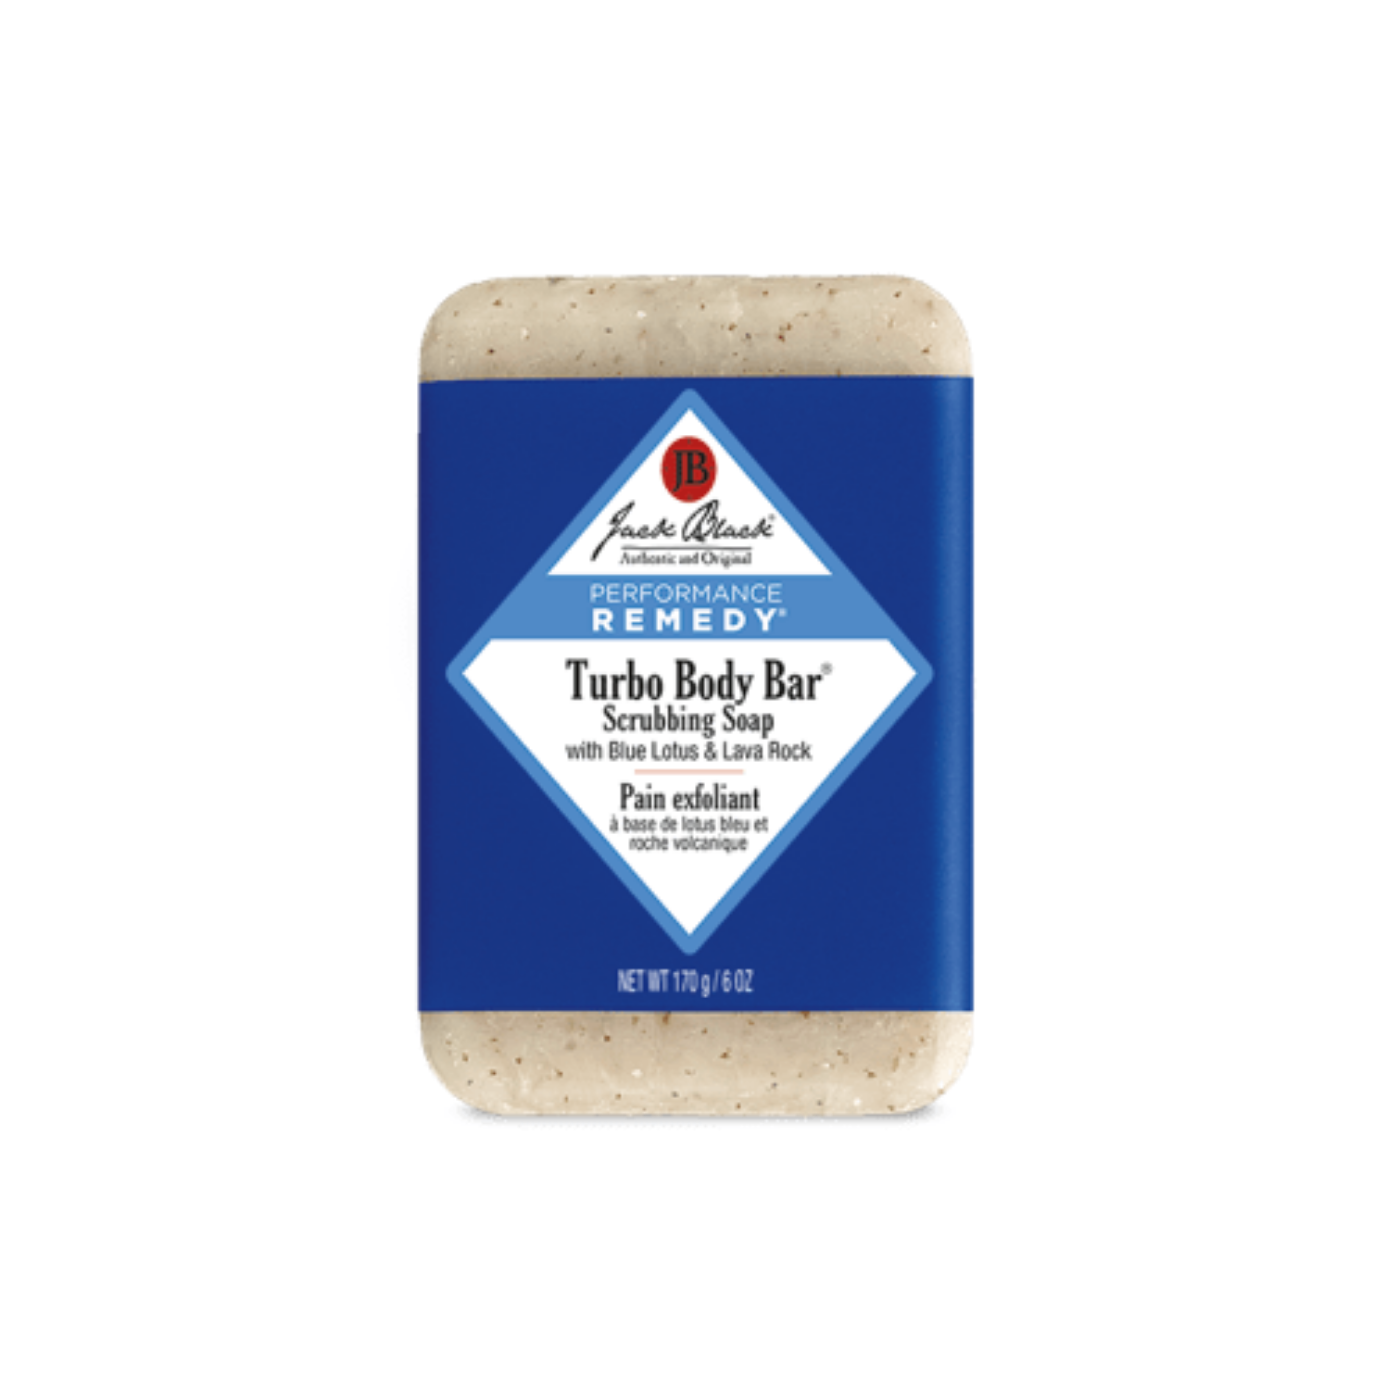 Jack Black Turbo Body Bar Scrubbing Soap, 177ml